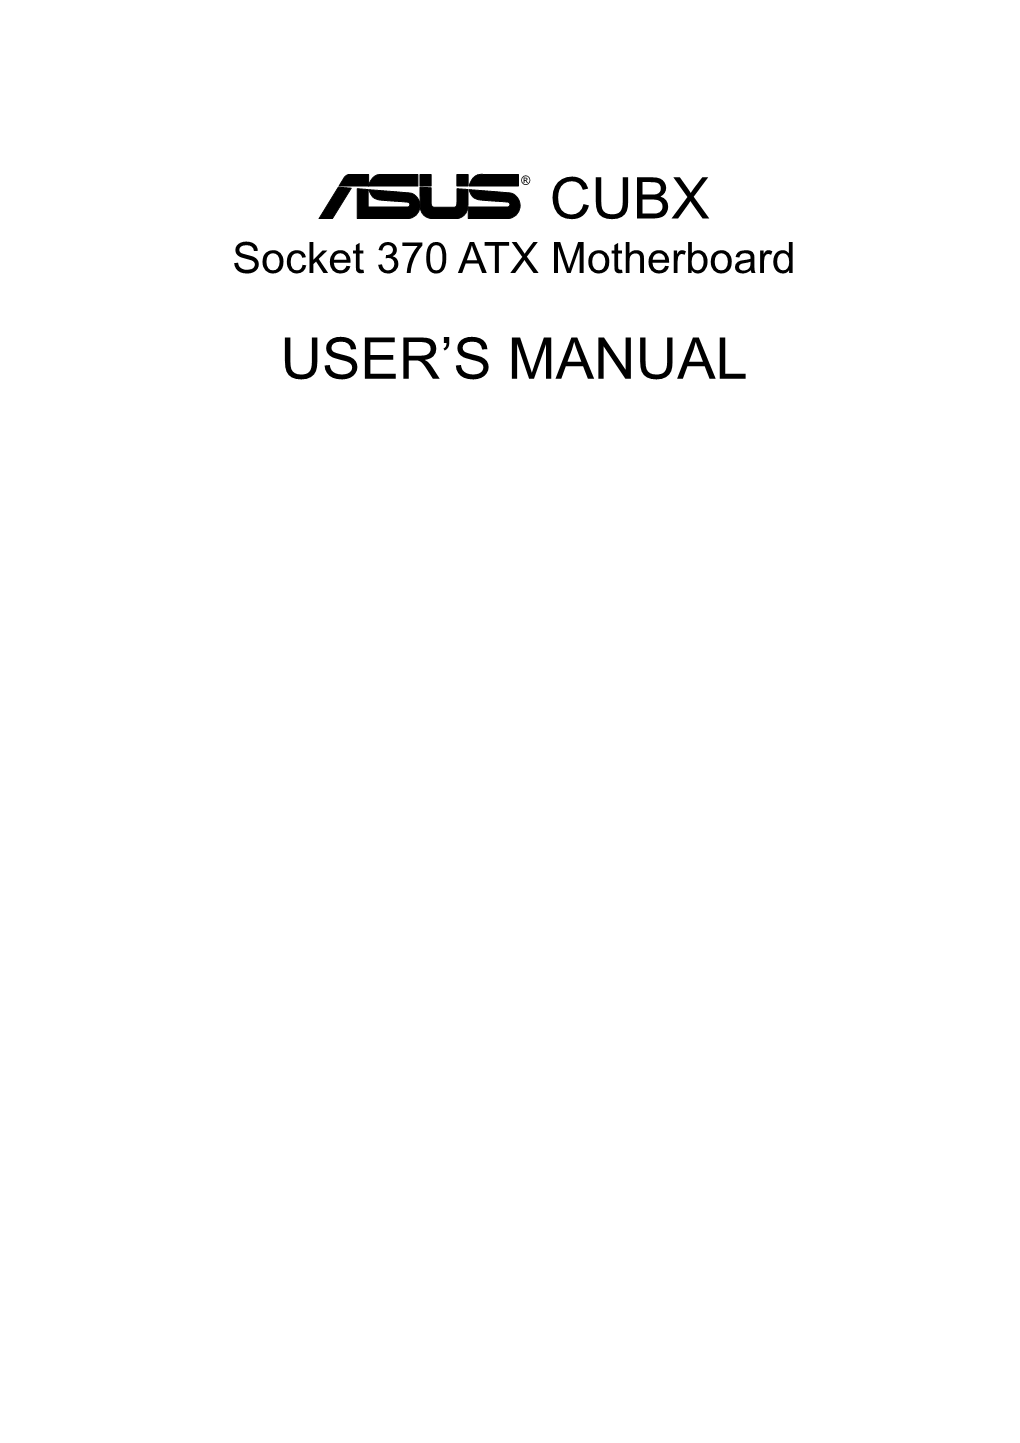 Cubx User's Manual